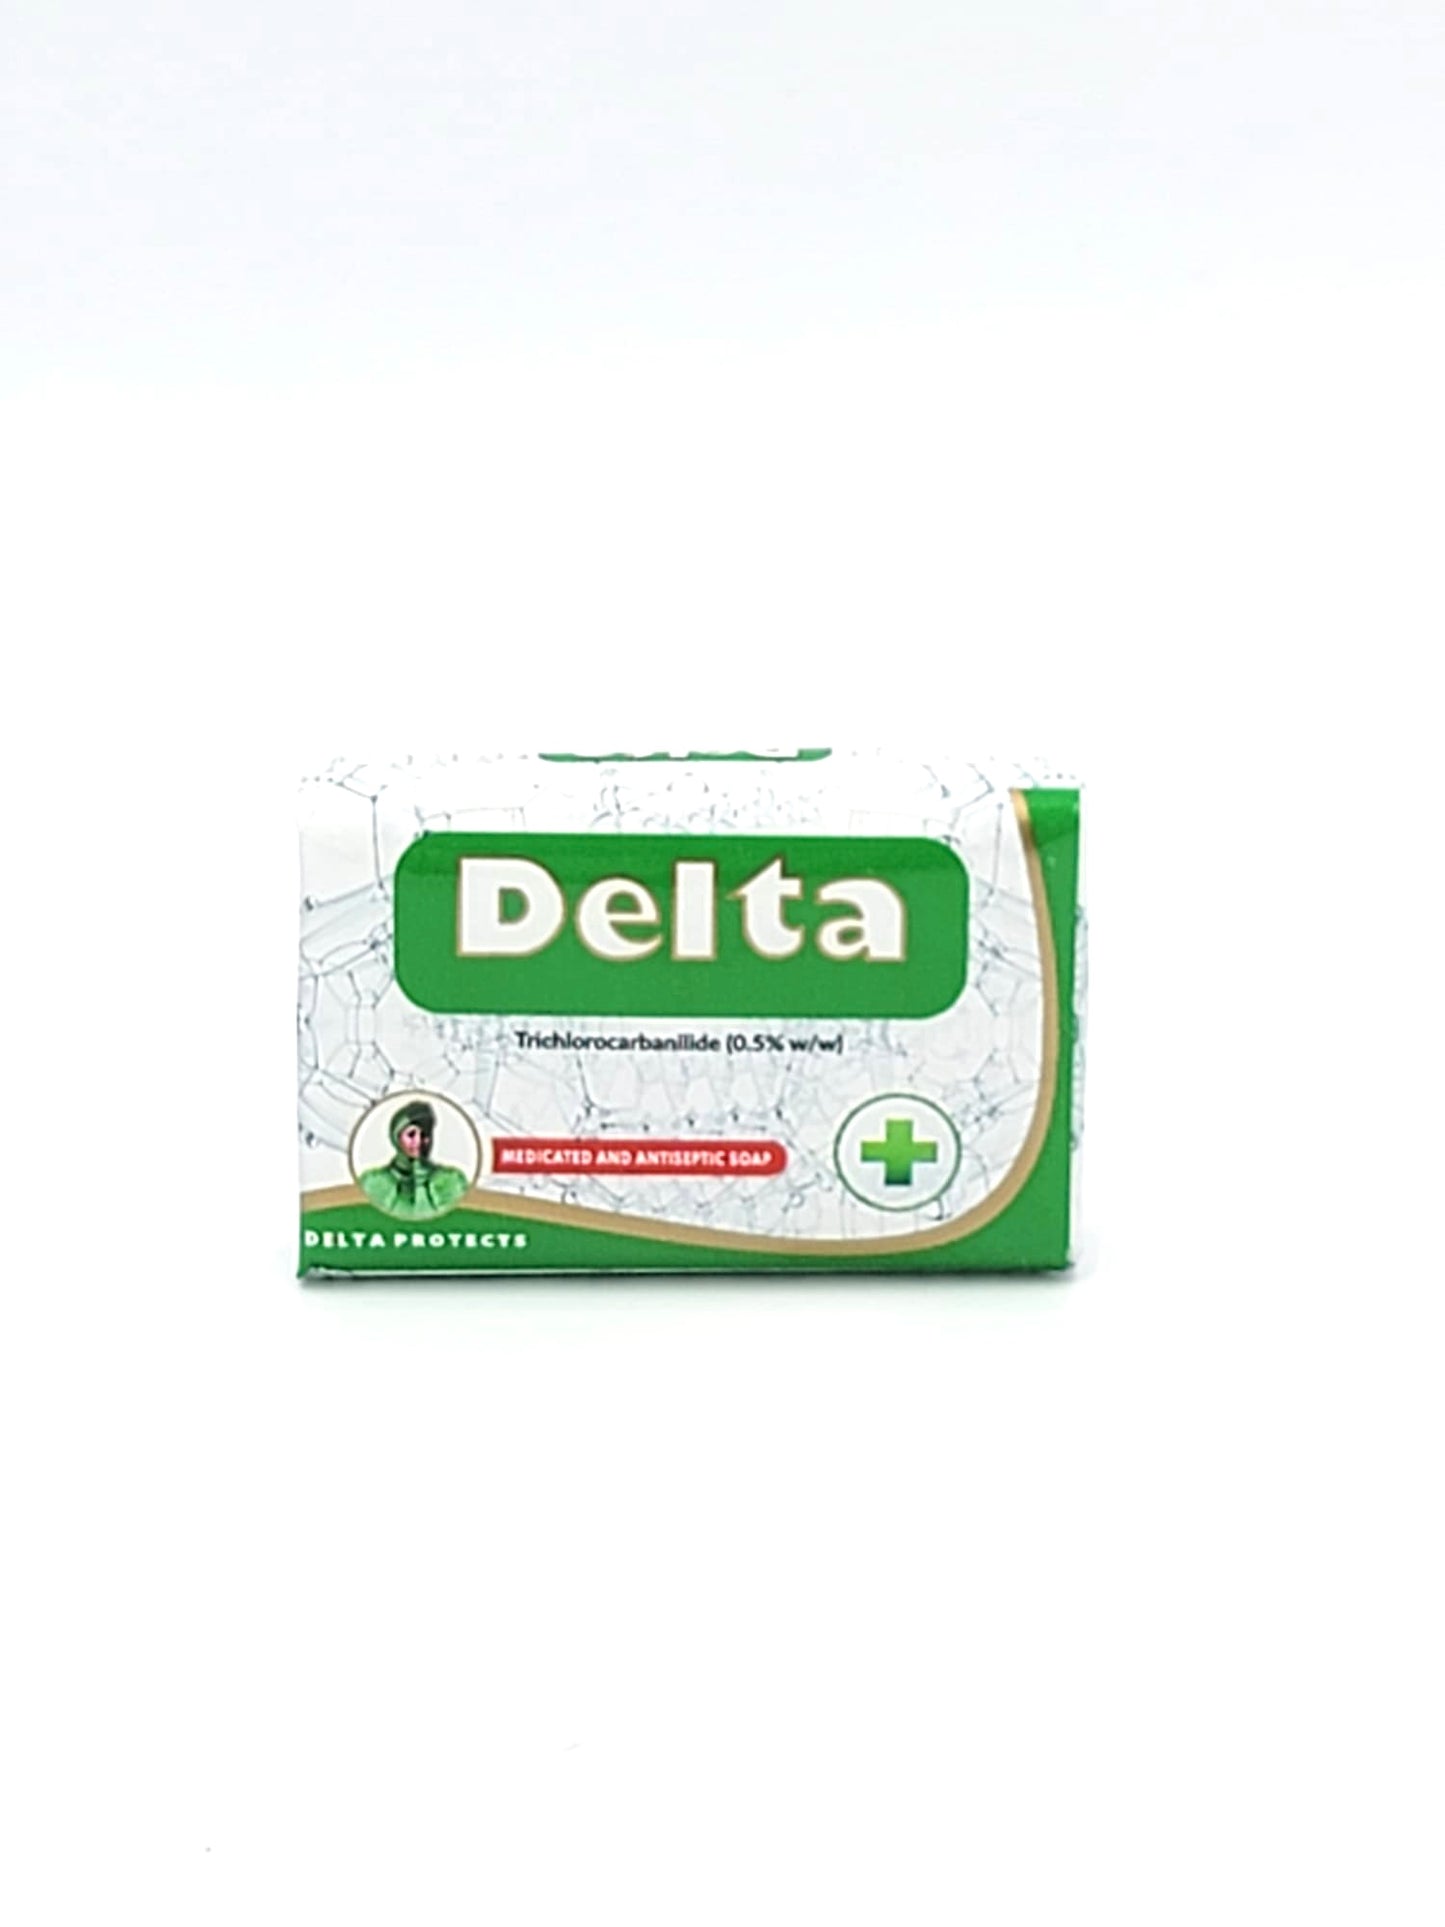 Delta Antiseptic Soap